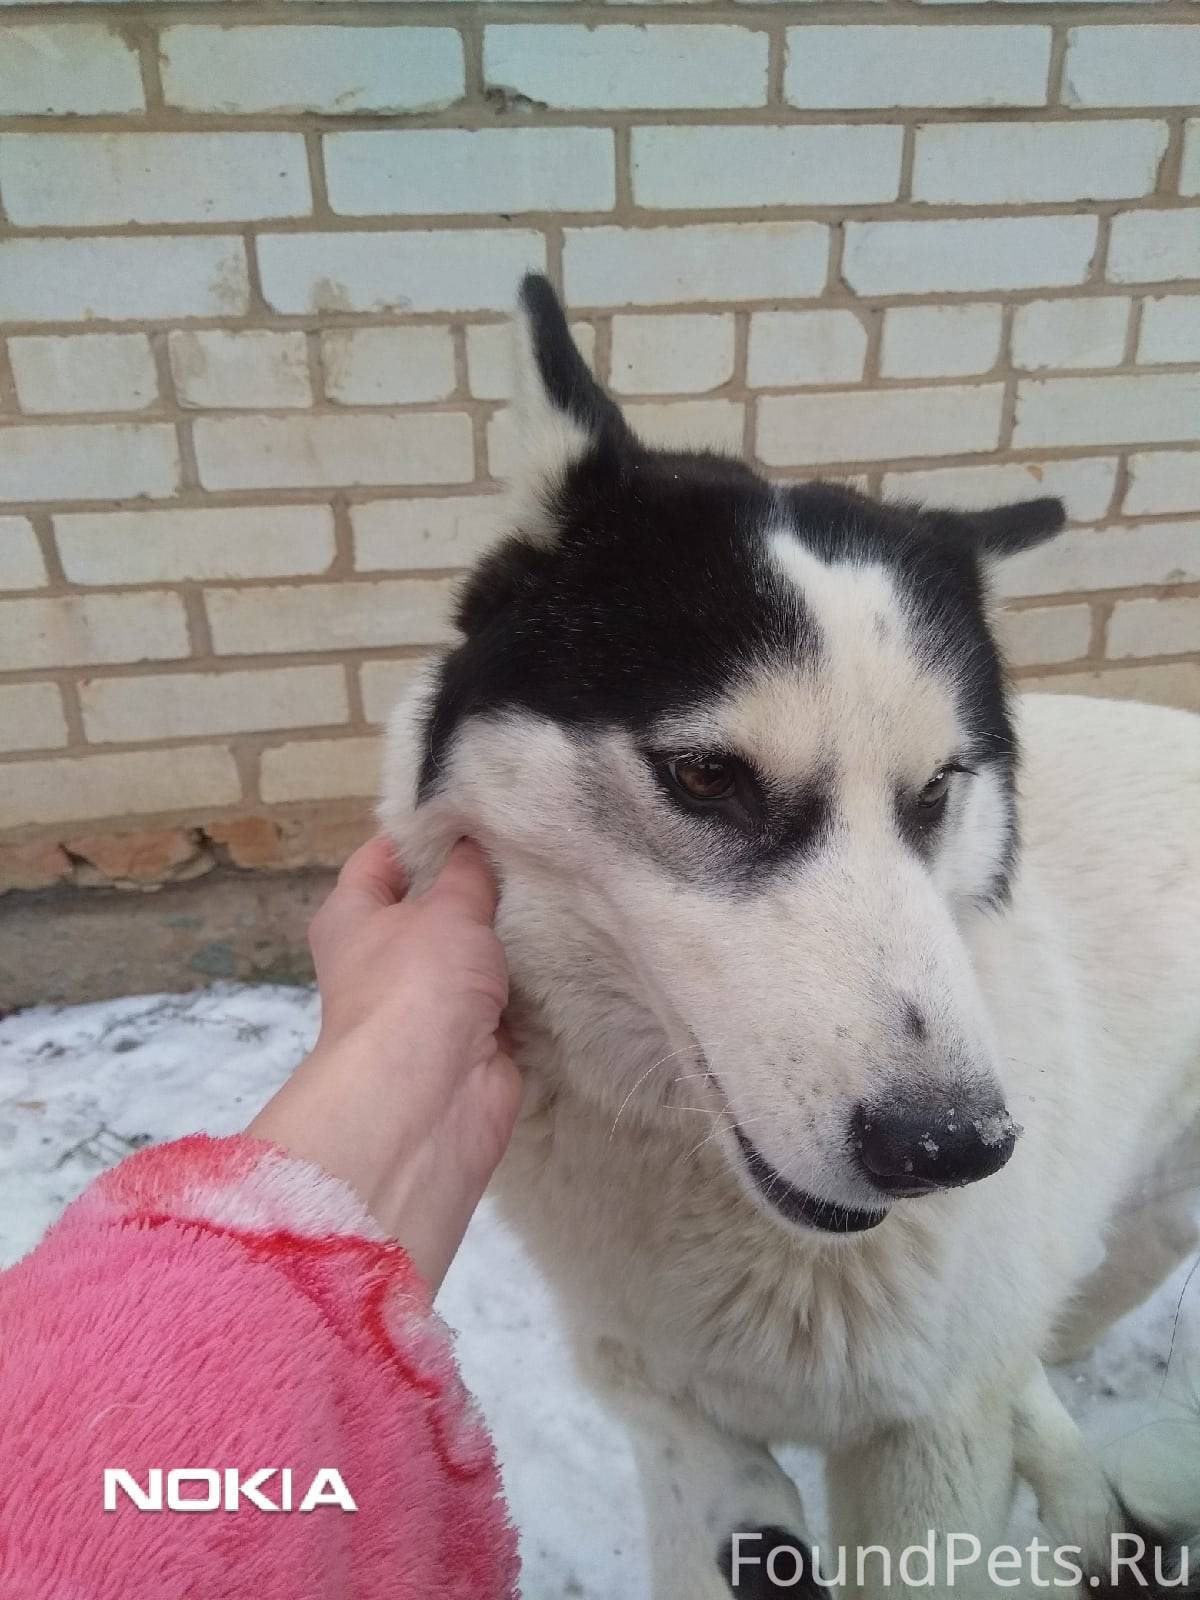 Найдена собака в районе Шевченко